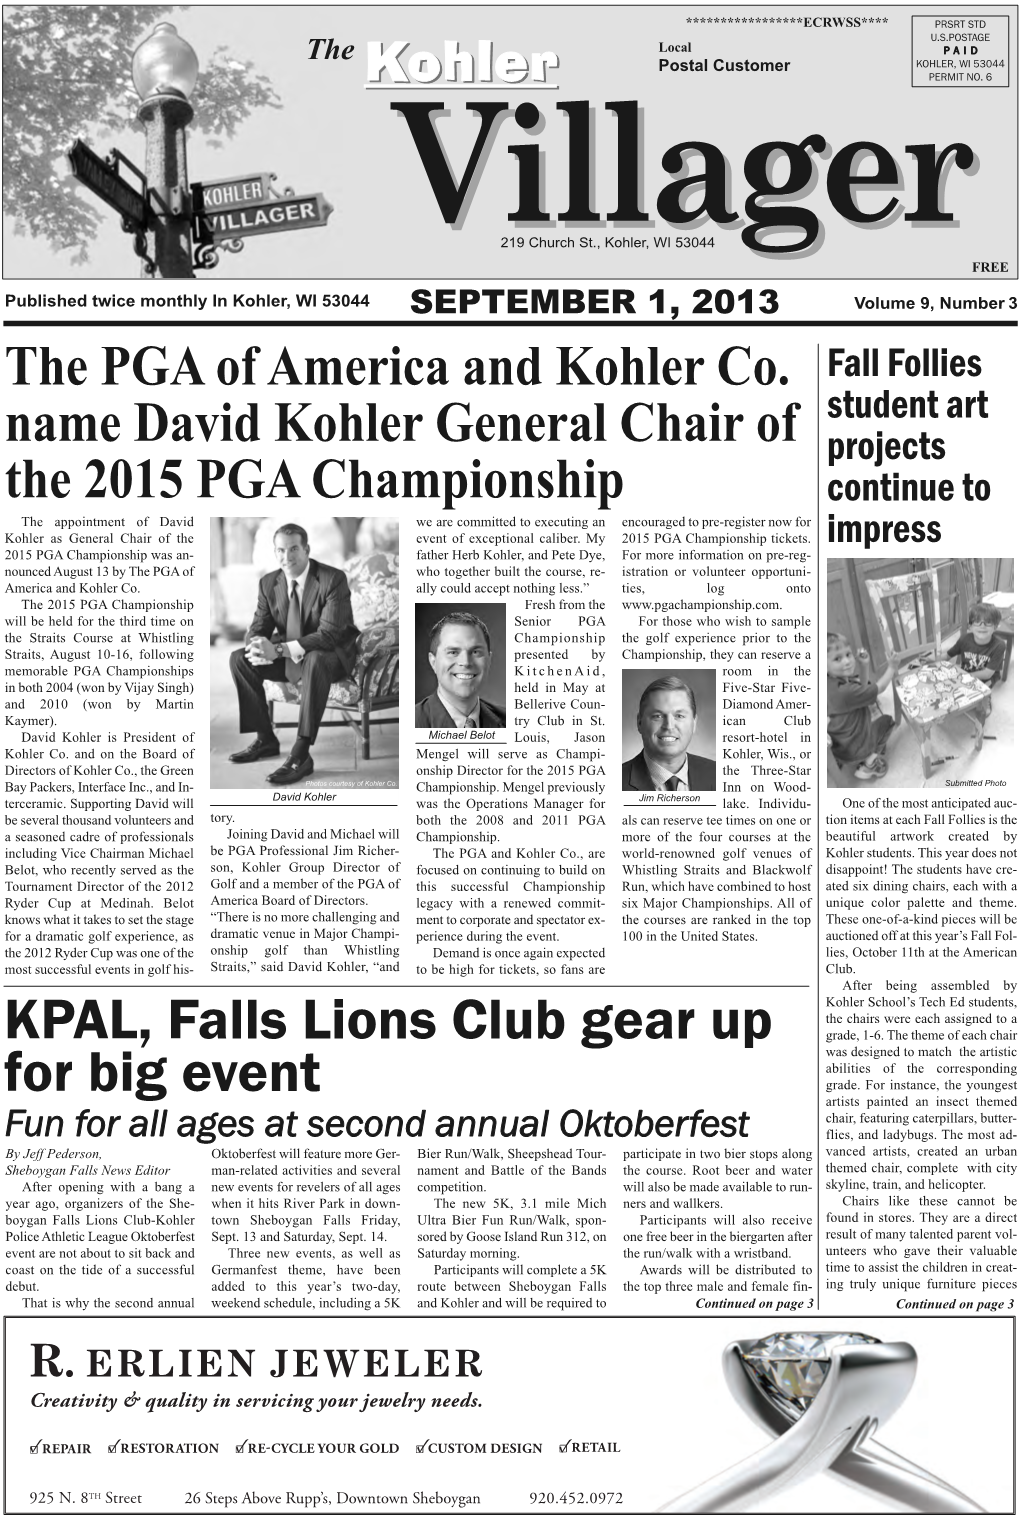 KPAL, Falls Lions Club Gear up for Big Event